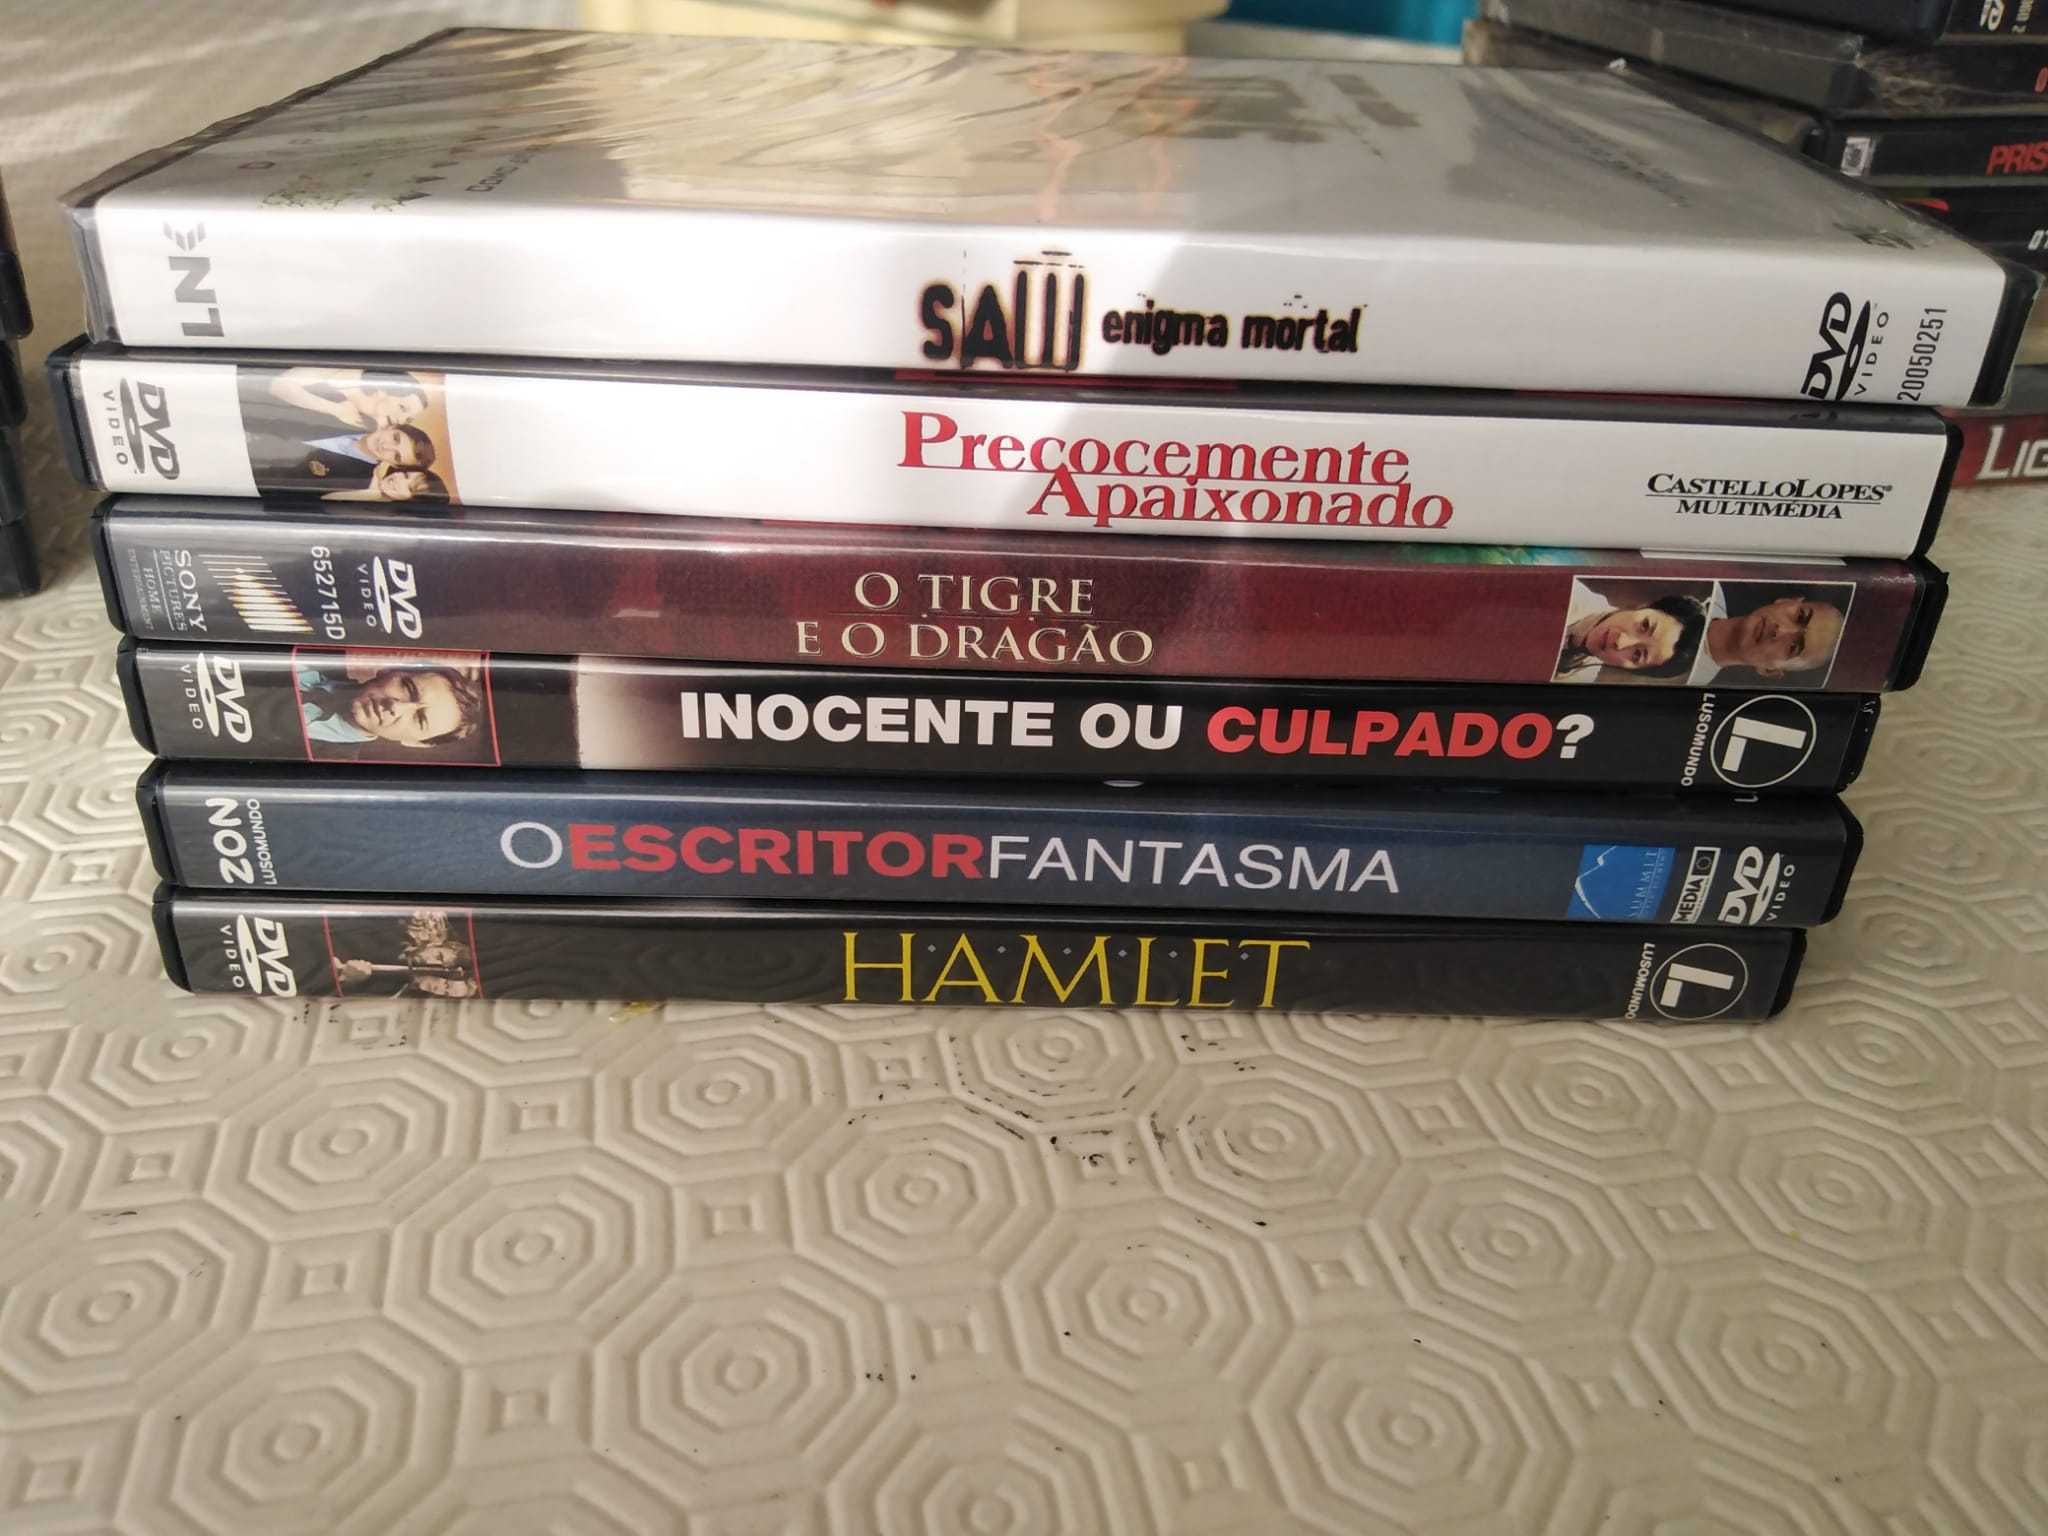 DVD (Saw, A vida é bela, Hamlet, Flyboys, O piano, Hannibal, etc.)